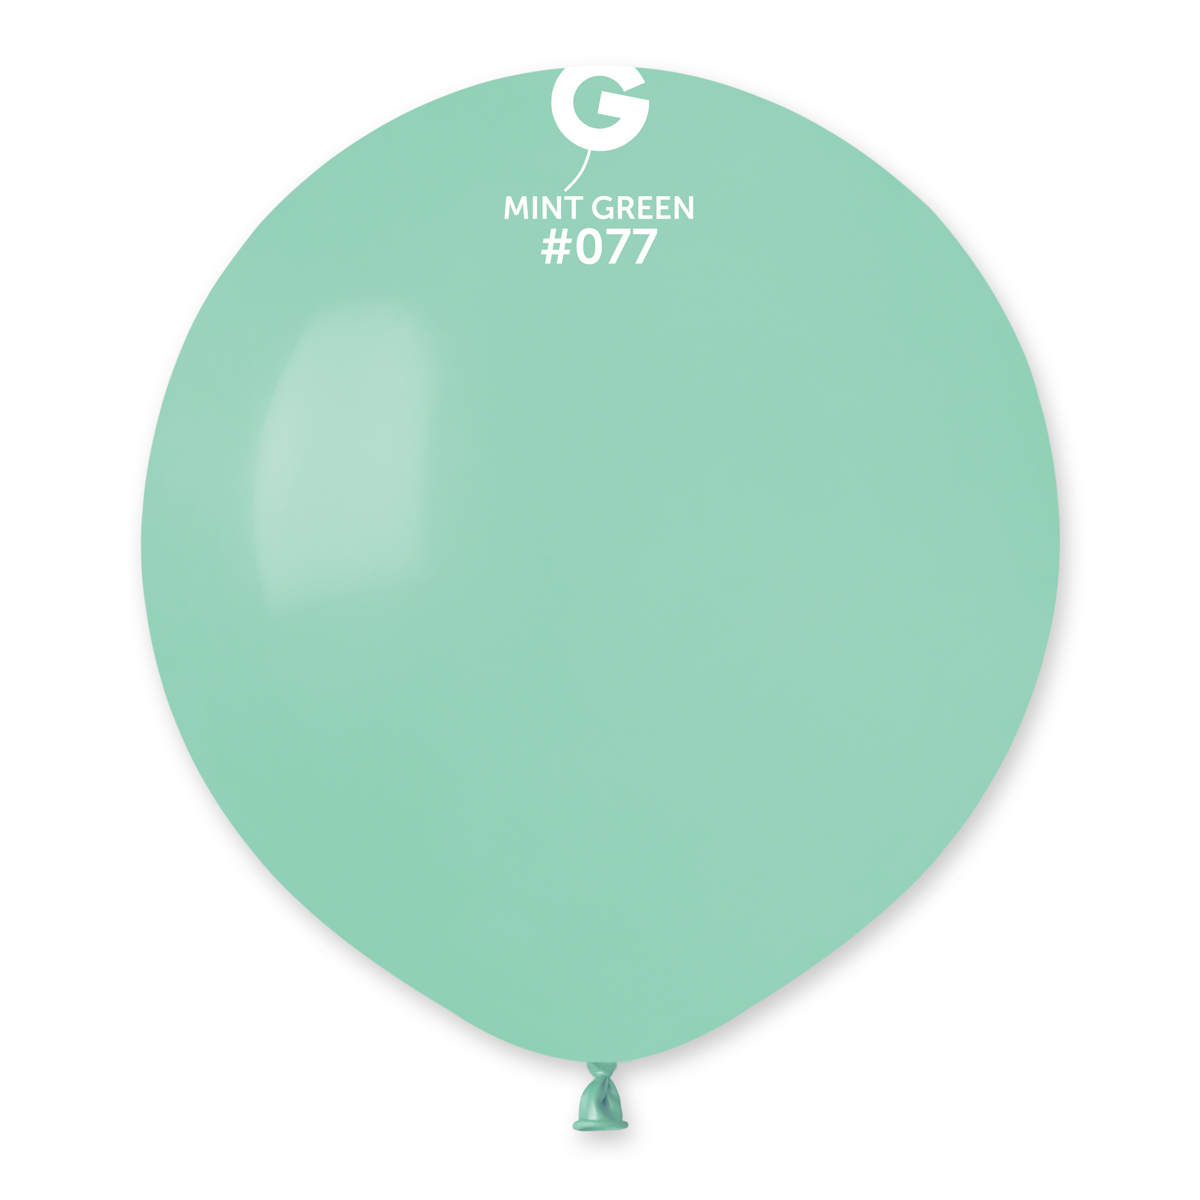 Gemar Balón pastelový mátově-zelený 48 cm